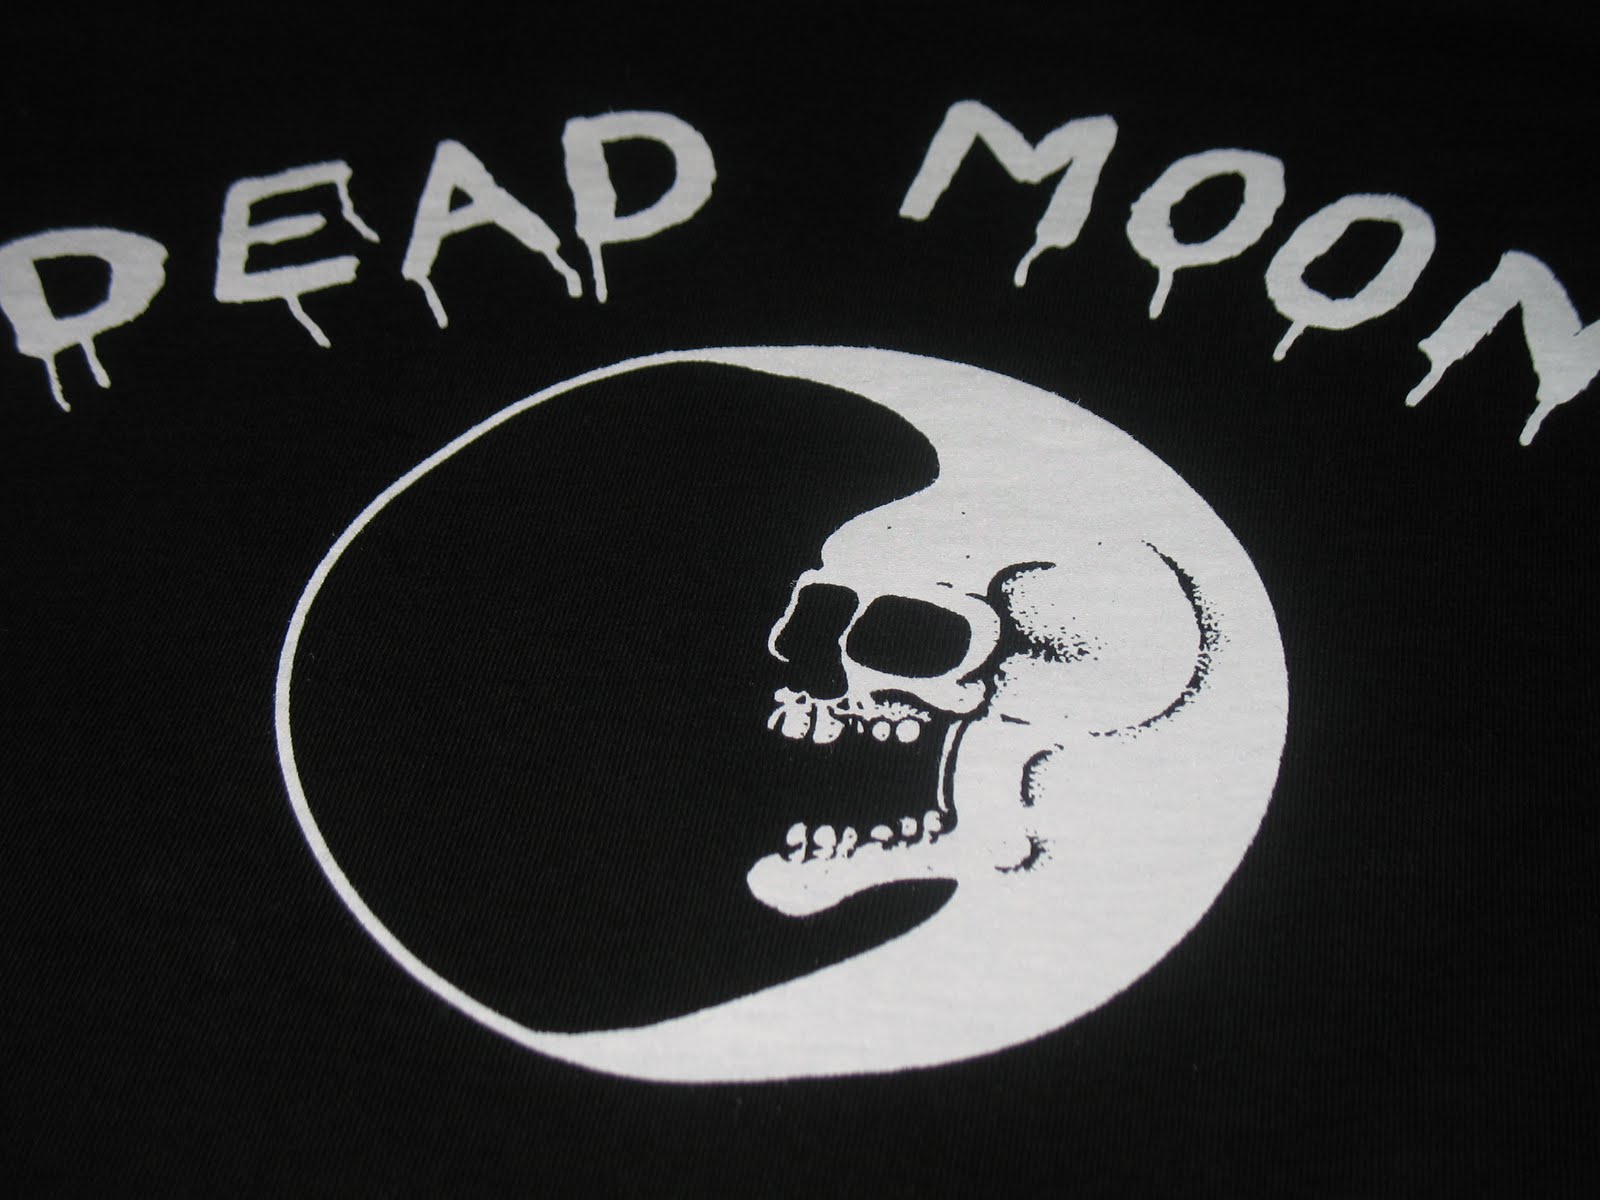 Дохлая луна. Dead Moon. Мертвая Луна. Dead Moon Band. Dead Moon logo.